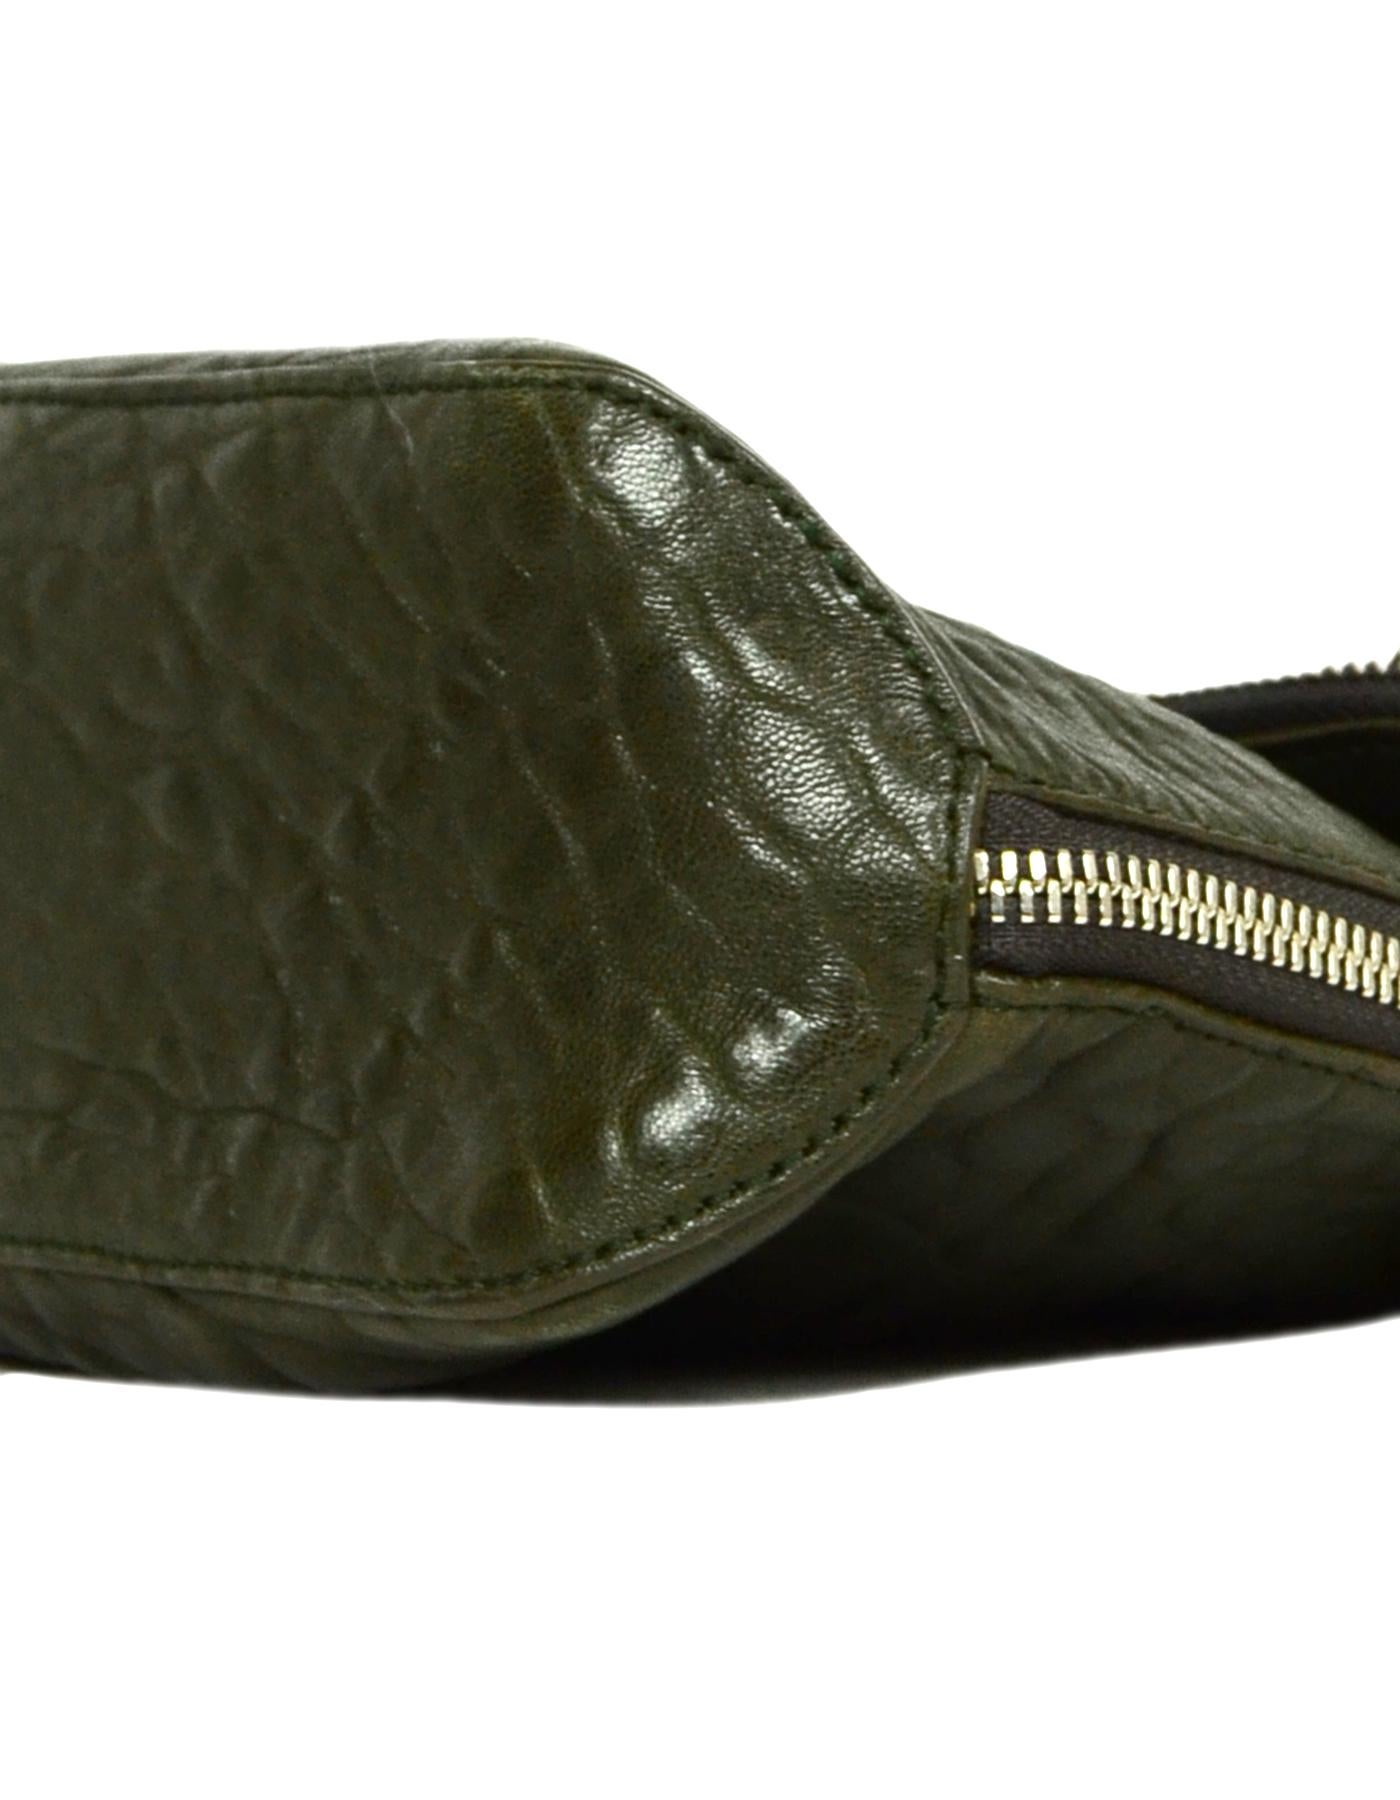 dark green leather clutch